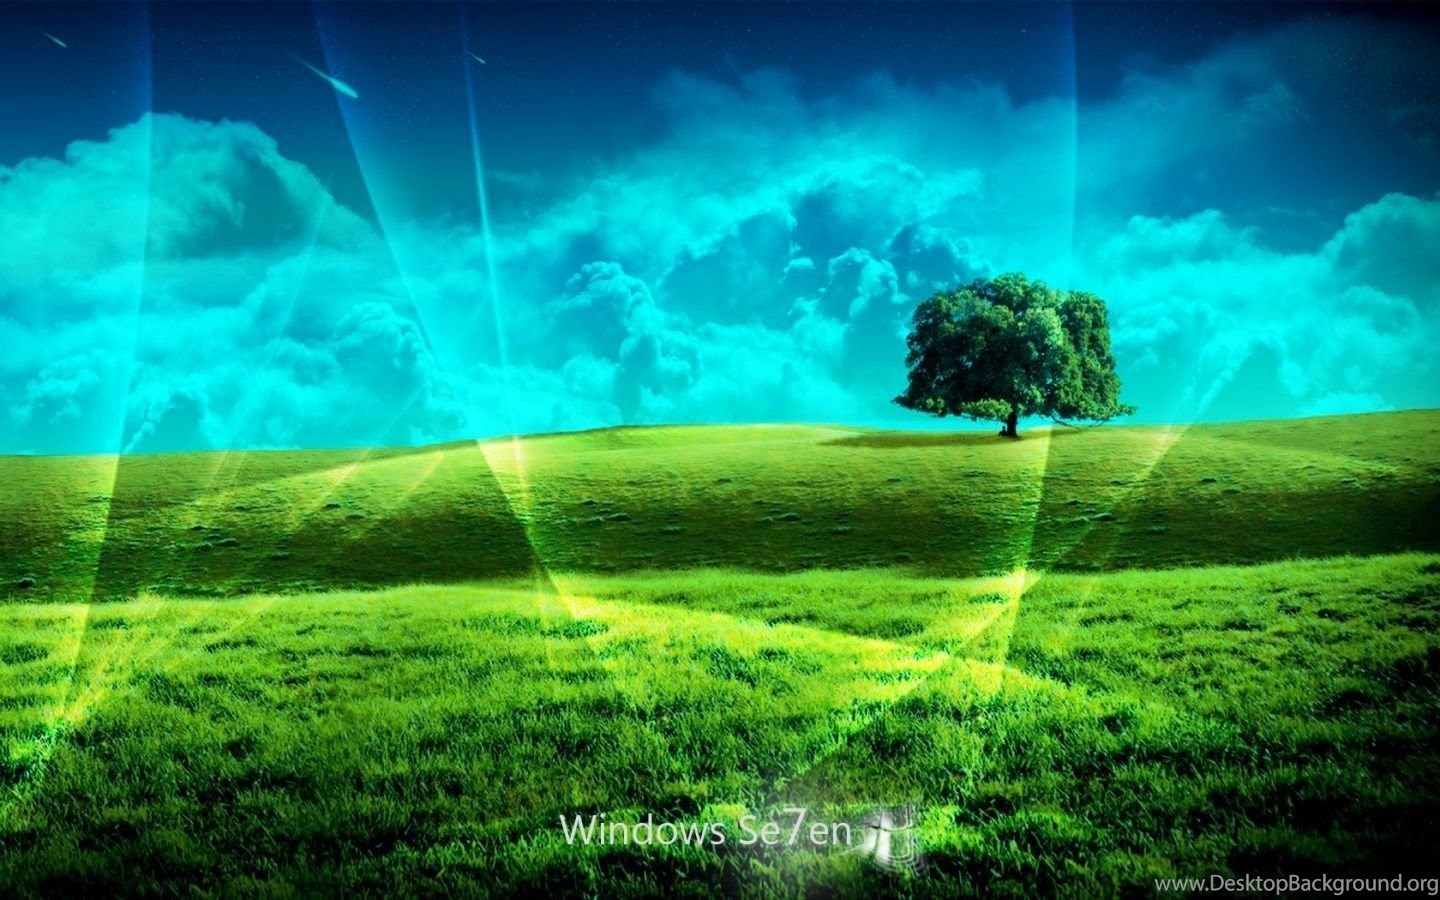 Top Windows Wallpaper 1440x900 Image For Desktop Background